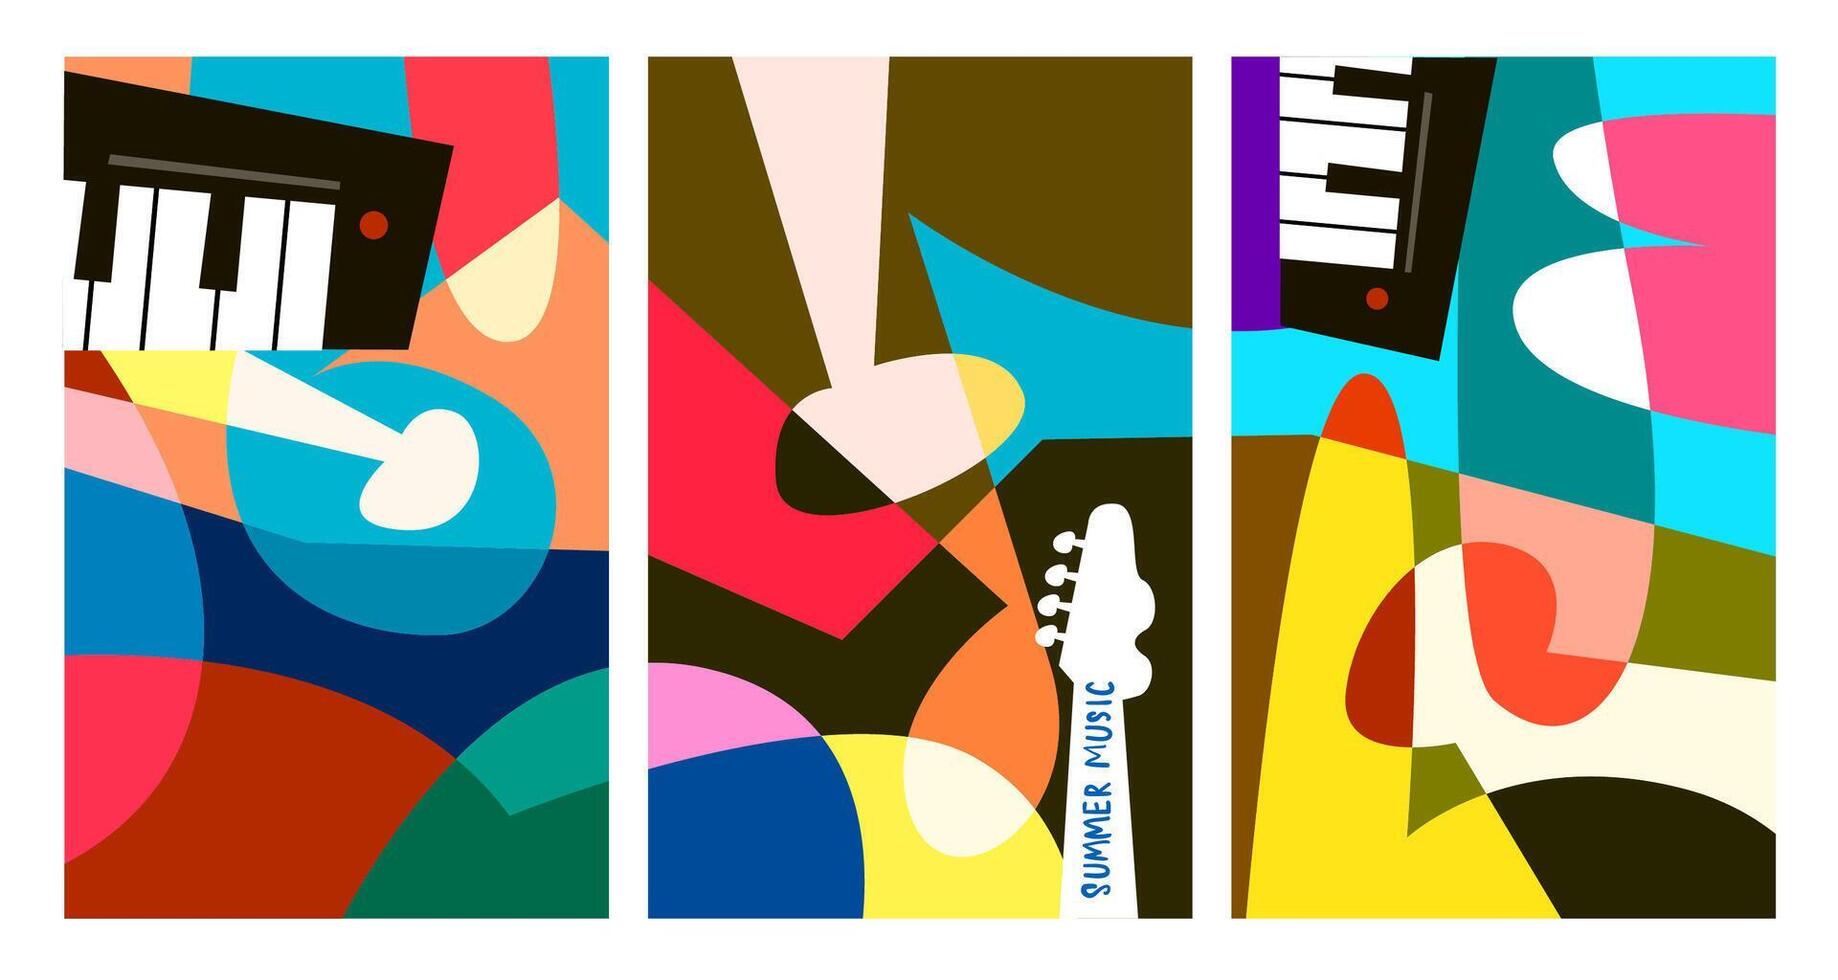 ilustración vectorial banner colorido festival de música de verano vector